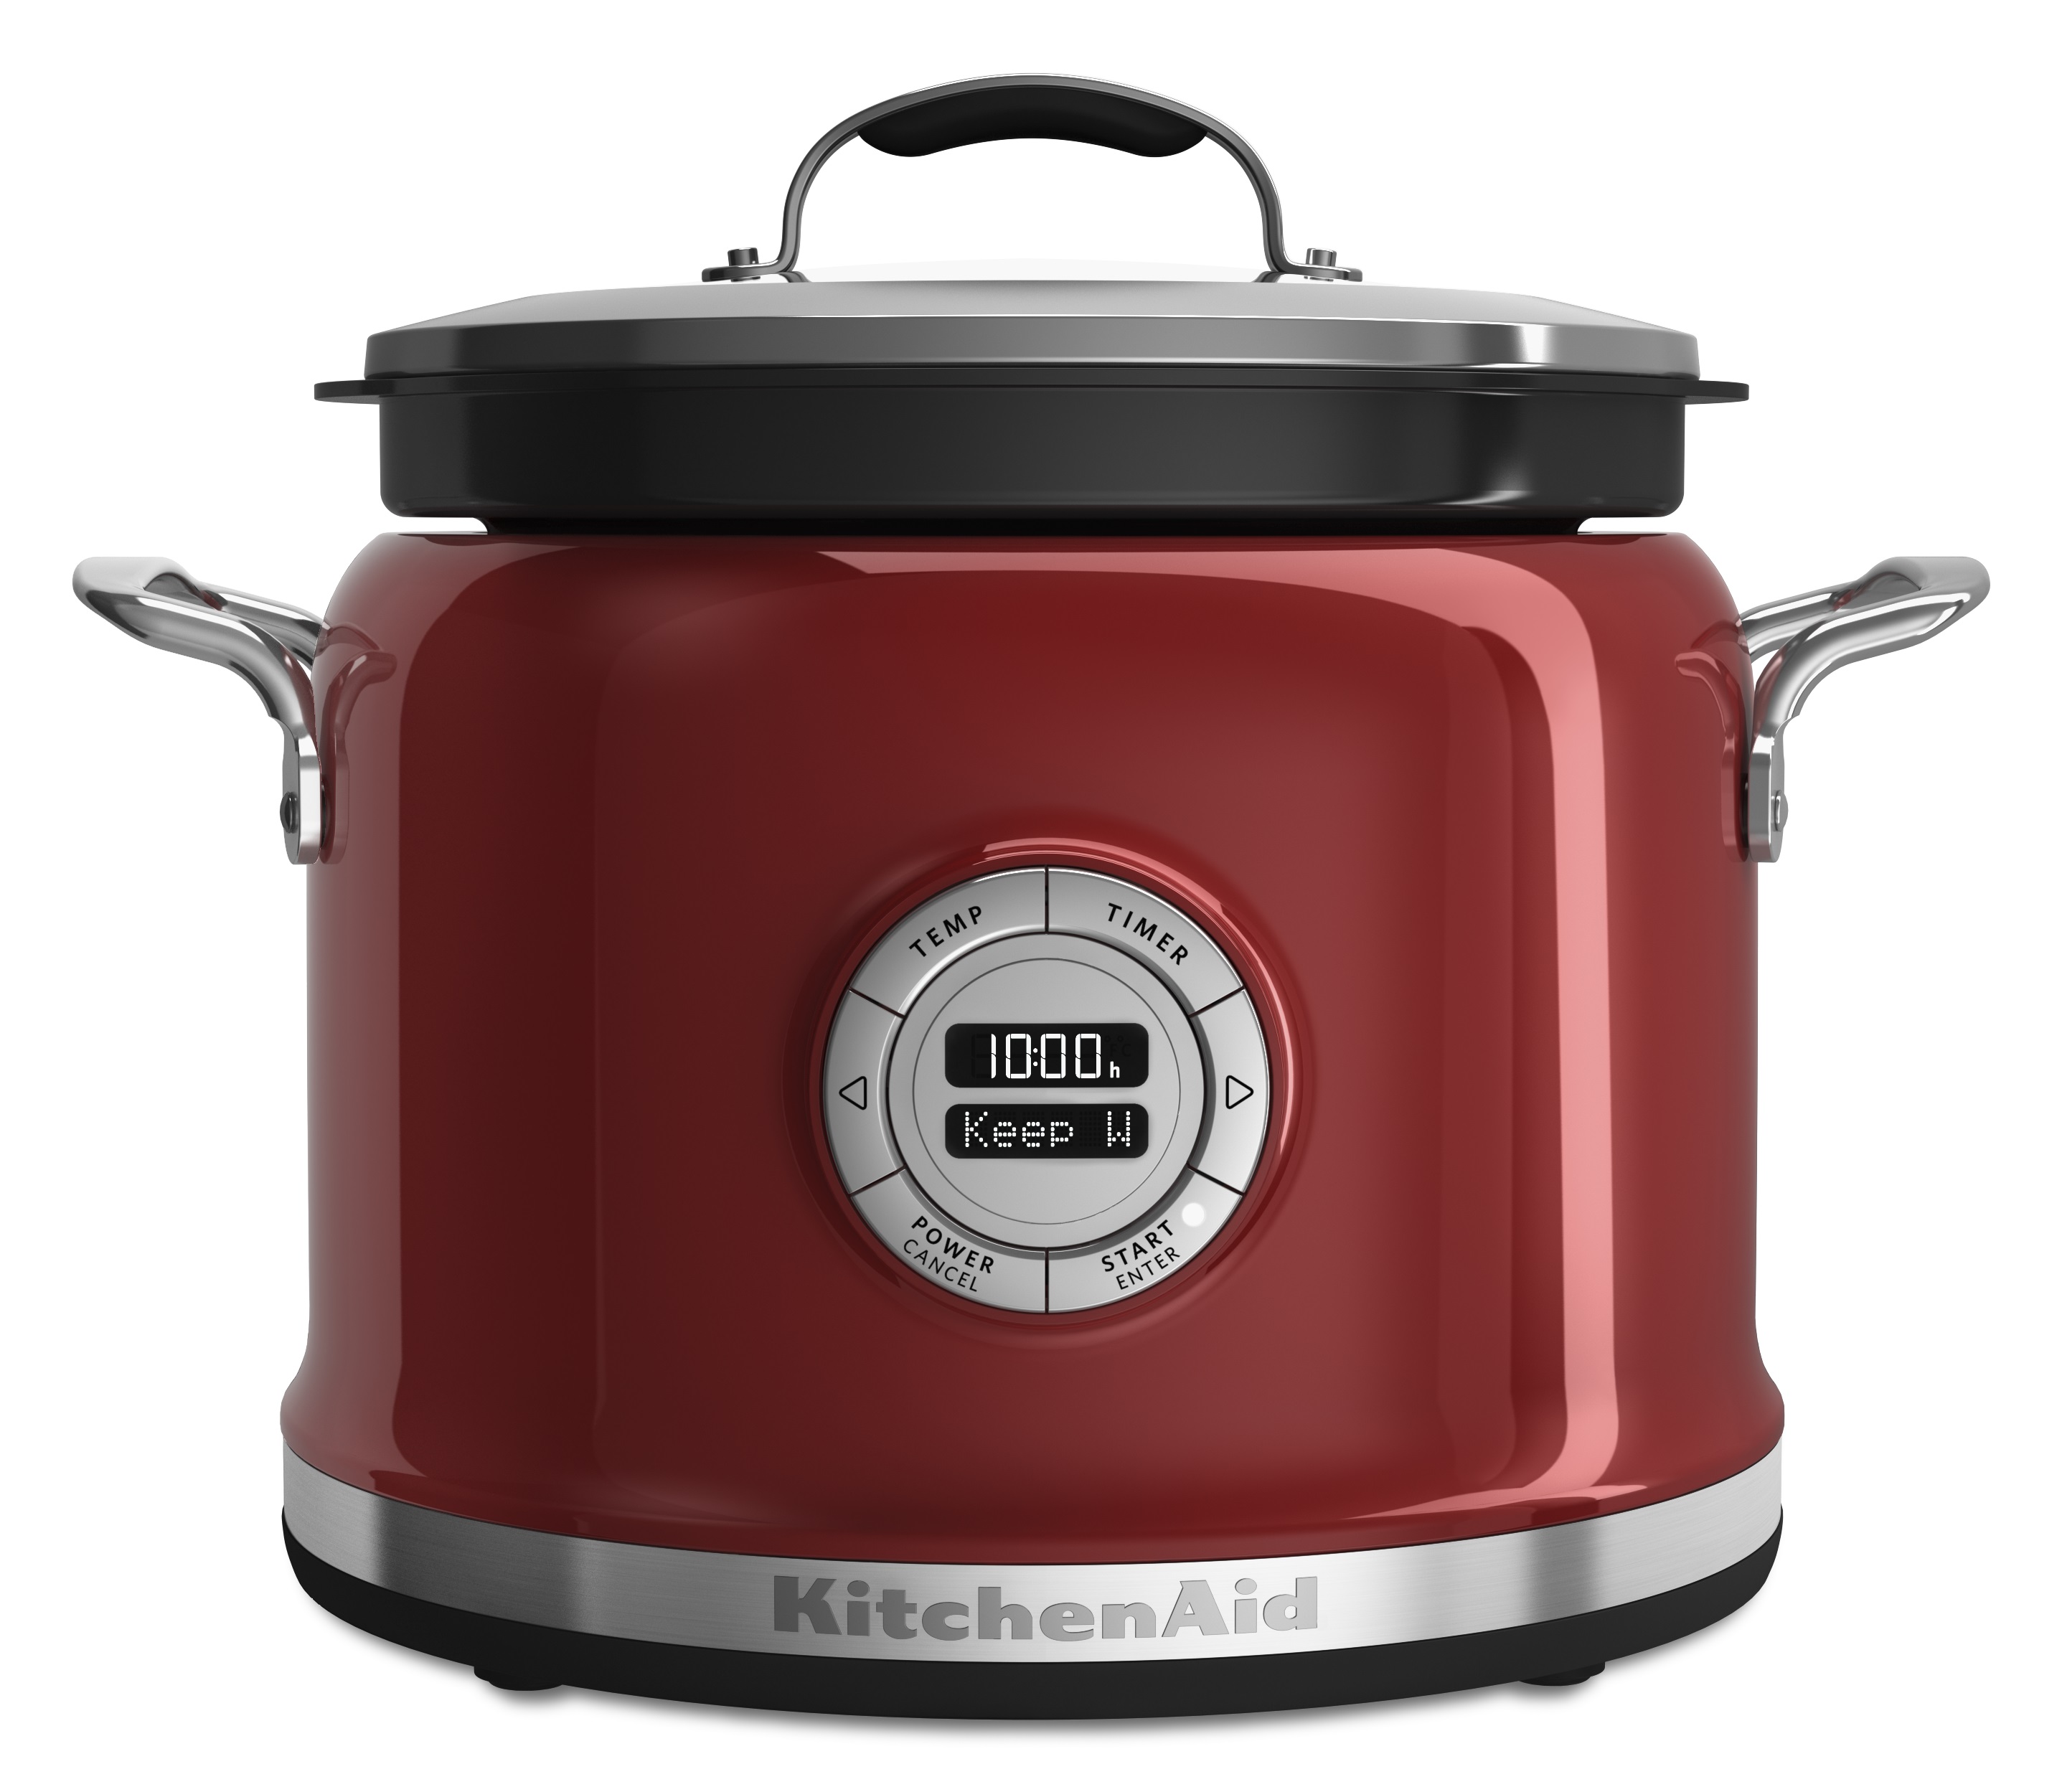 https://www.kitchenwarenews.com/wp-content/uploads/2015/02/KitchenAid-Multi-Cooker-Empire-Red.jpg